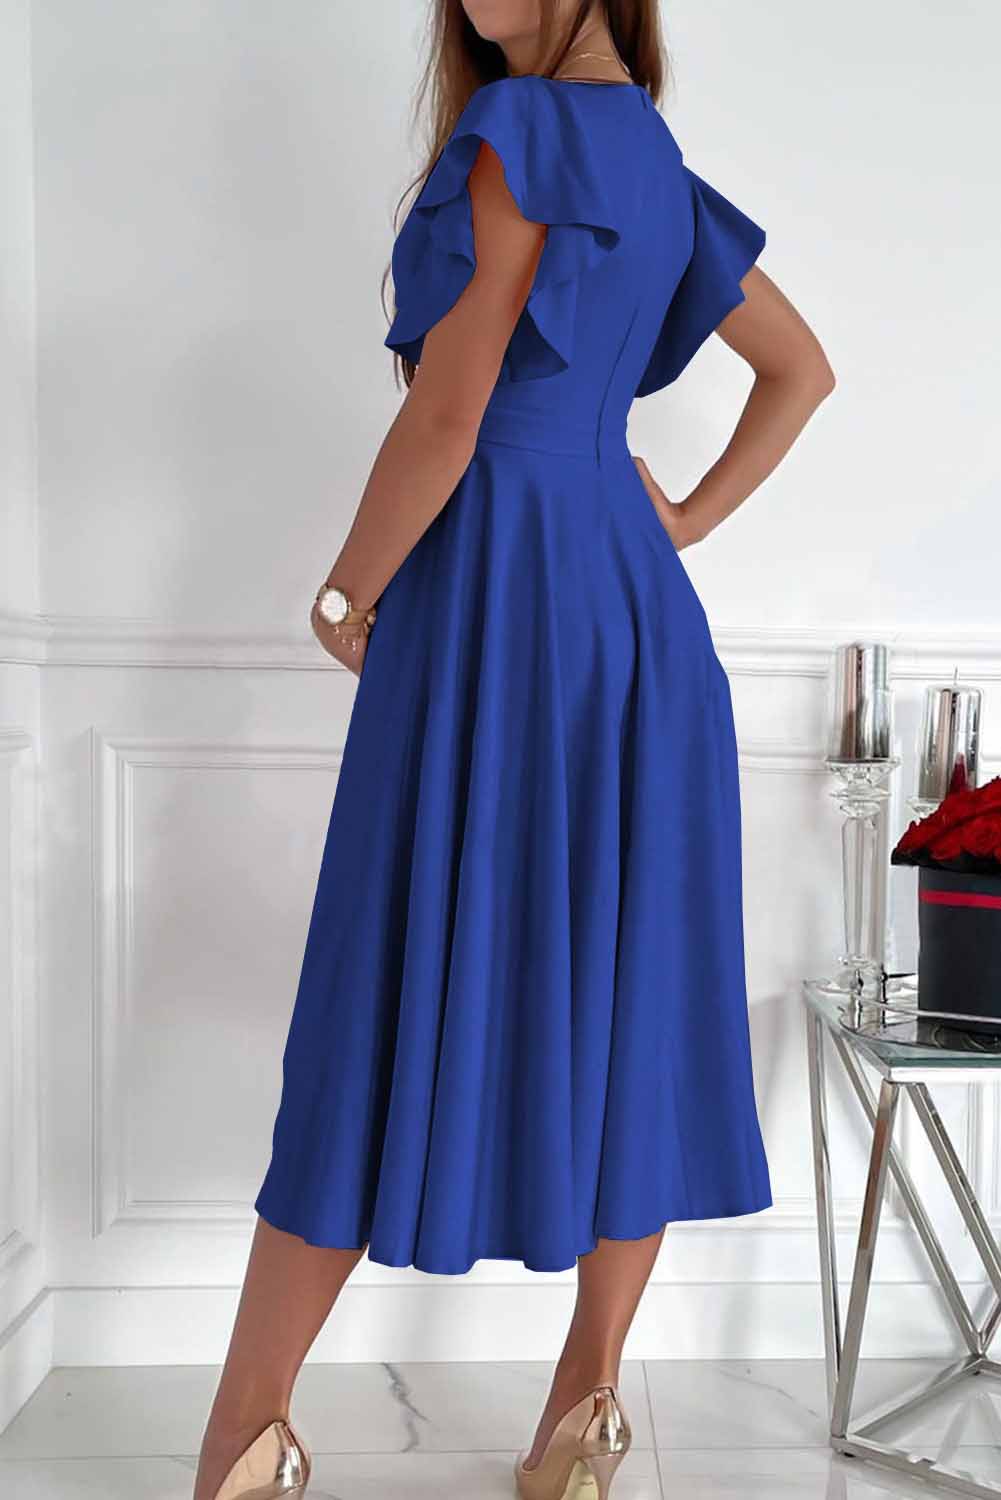 LC6110363-5-S, LC6110363-5-M, LC6110363-5-L, LC6110363-5-XL, LC6110363-5-2XL, Blue Womens V Neck Ruffle Sleeve Wrap Dress Midi Dress Cocktail Party Dress